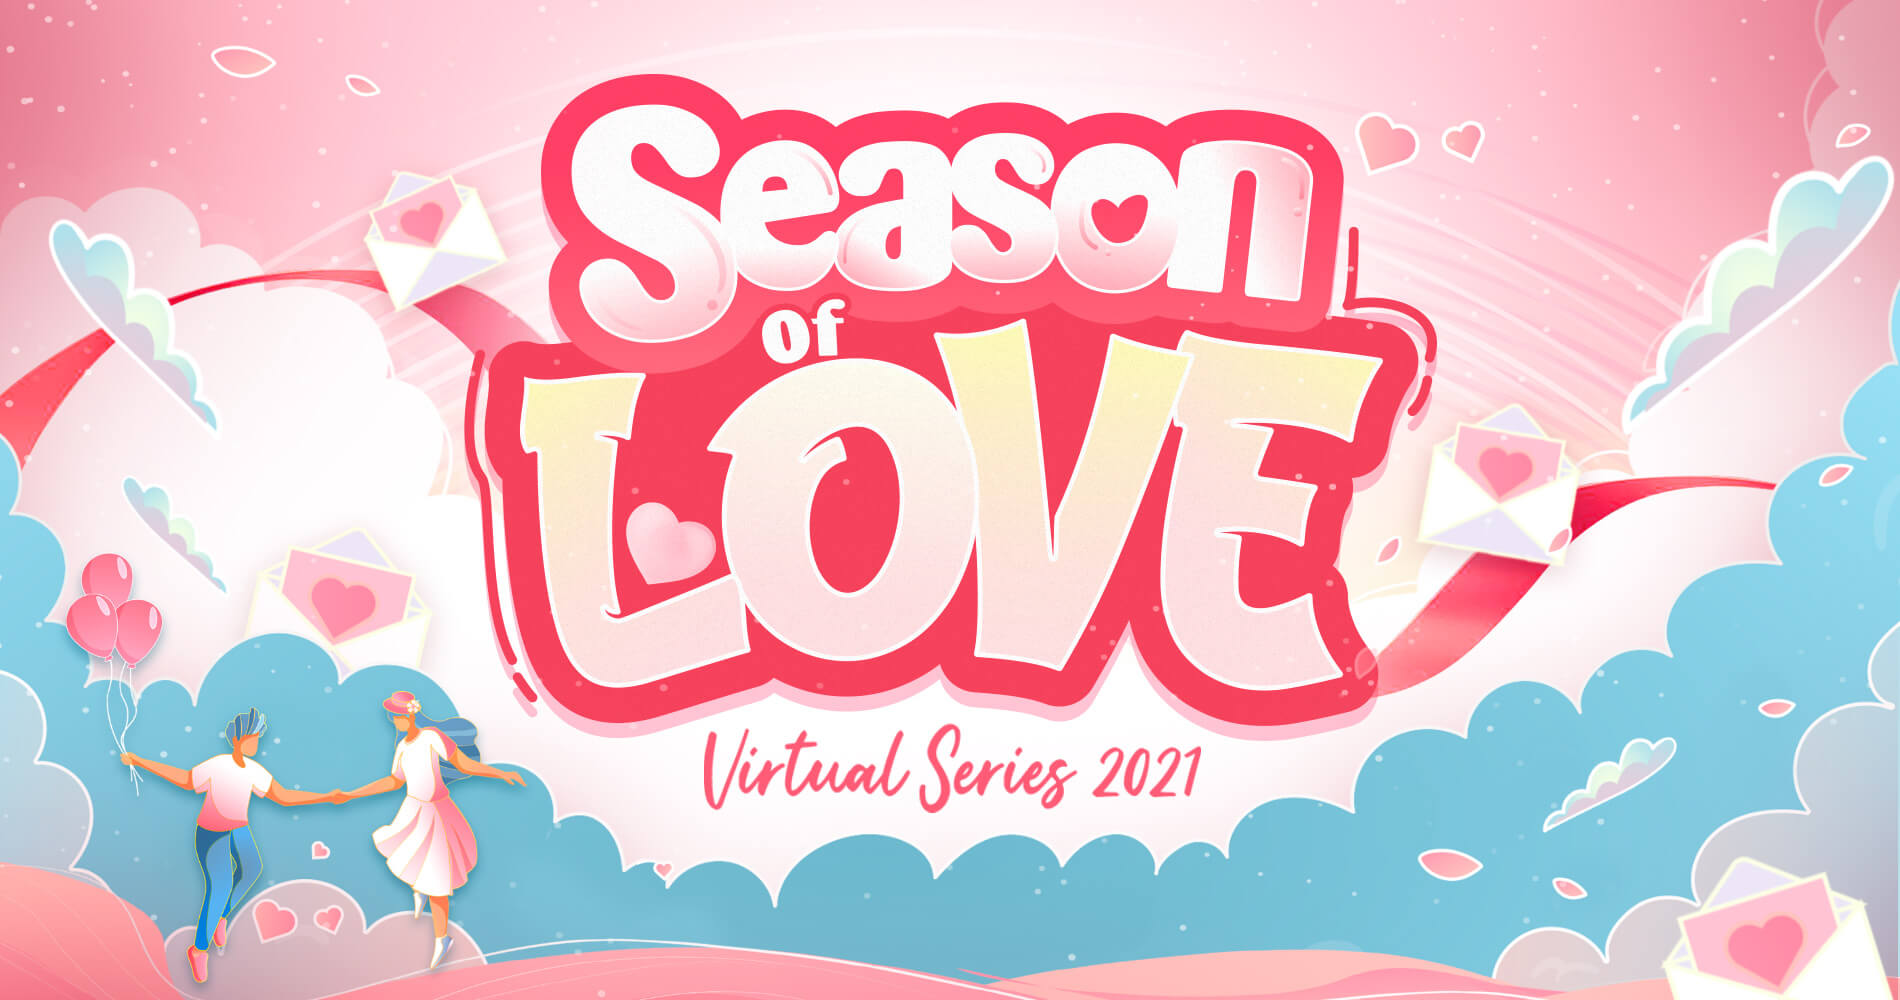 ‘Season of Love’ Virtual Series 2021